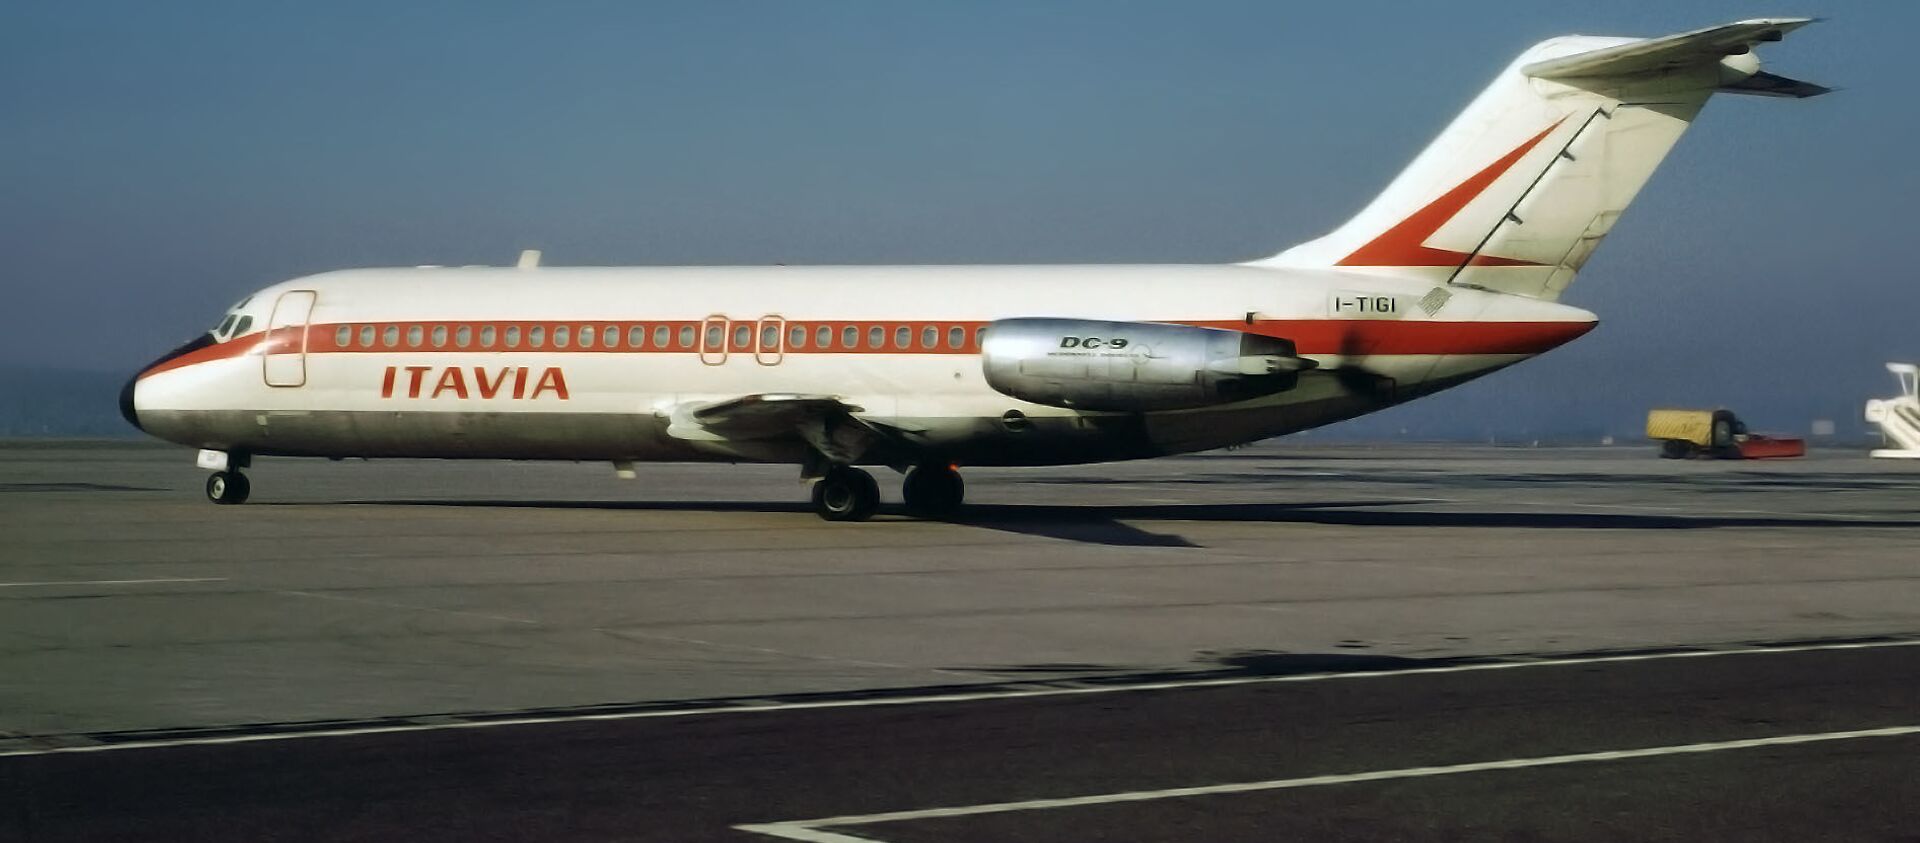 El avión DC-9 de la aerolínea Itavia  - Sputnik Mundo, 1920, 27.06.2020